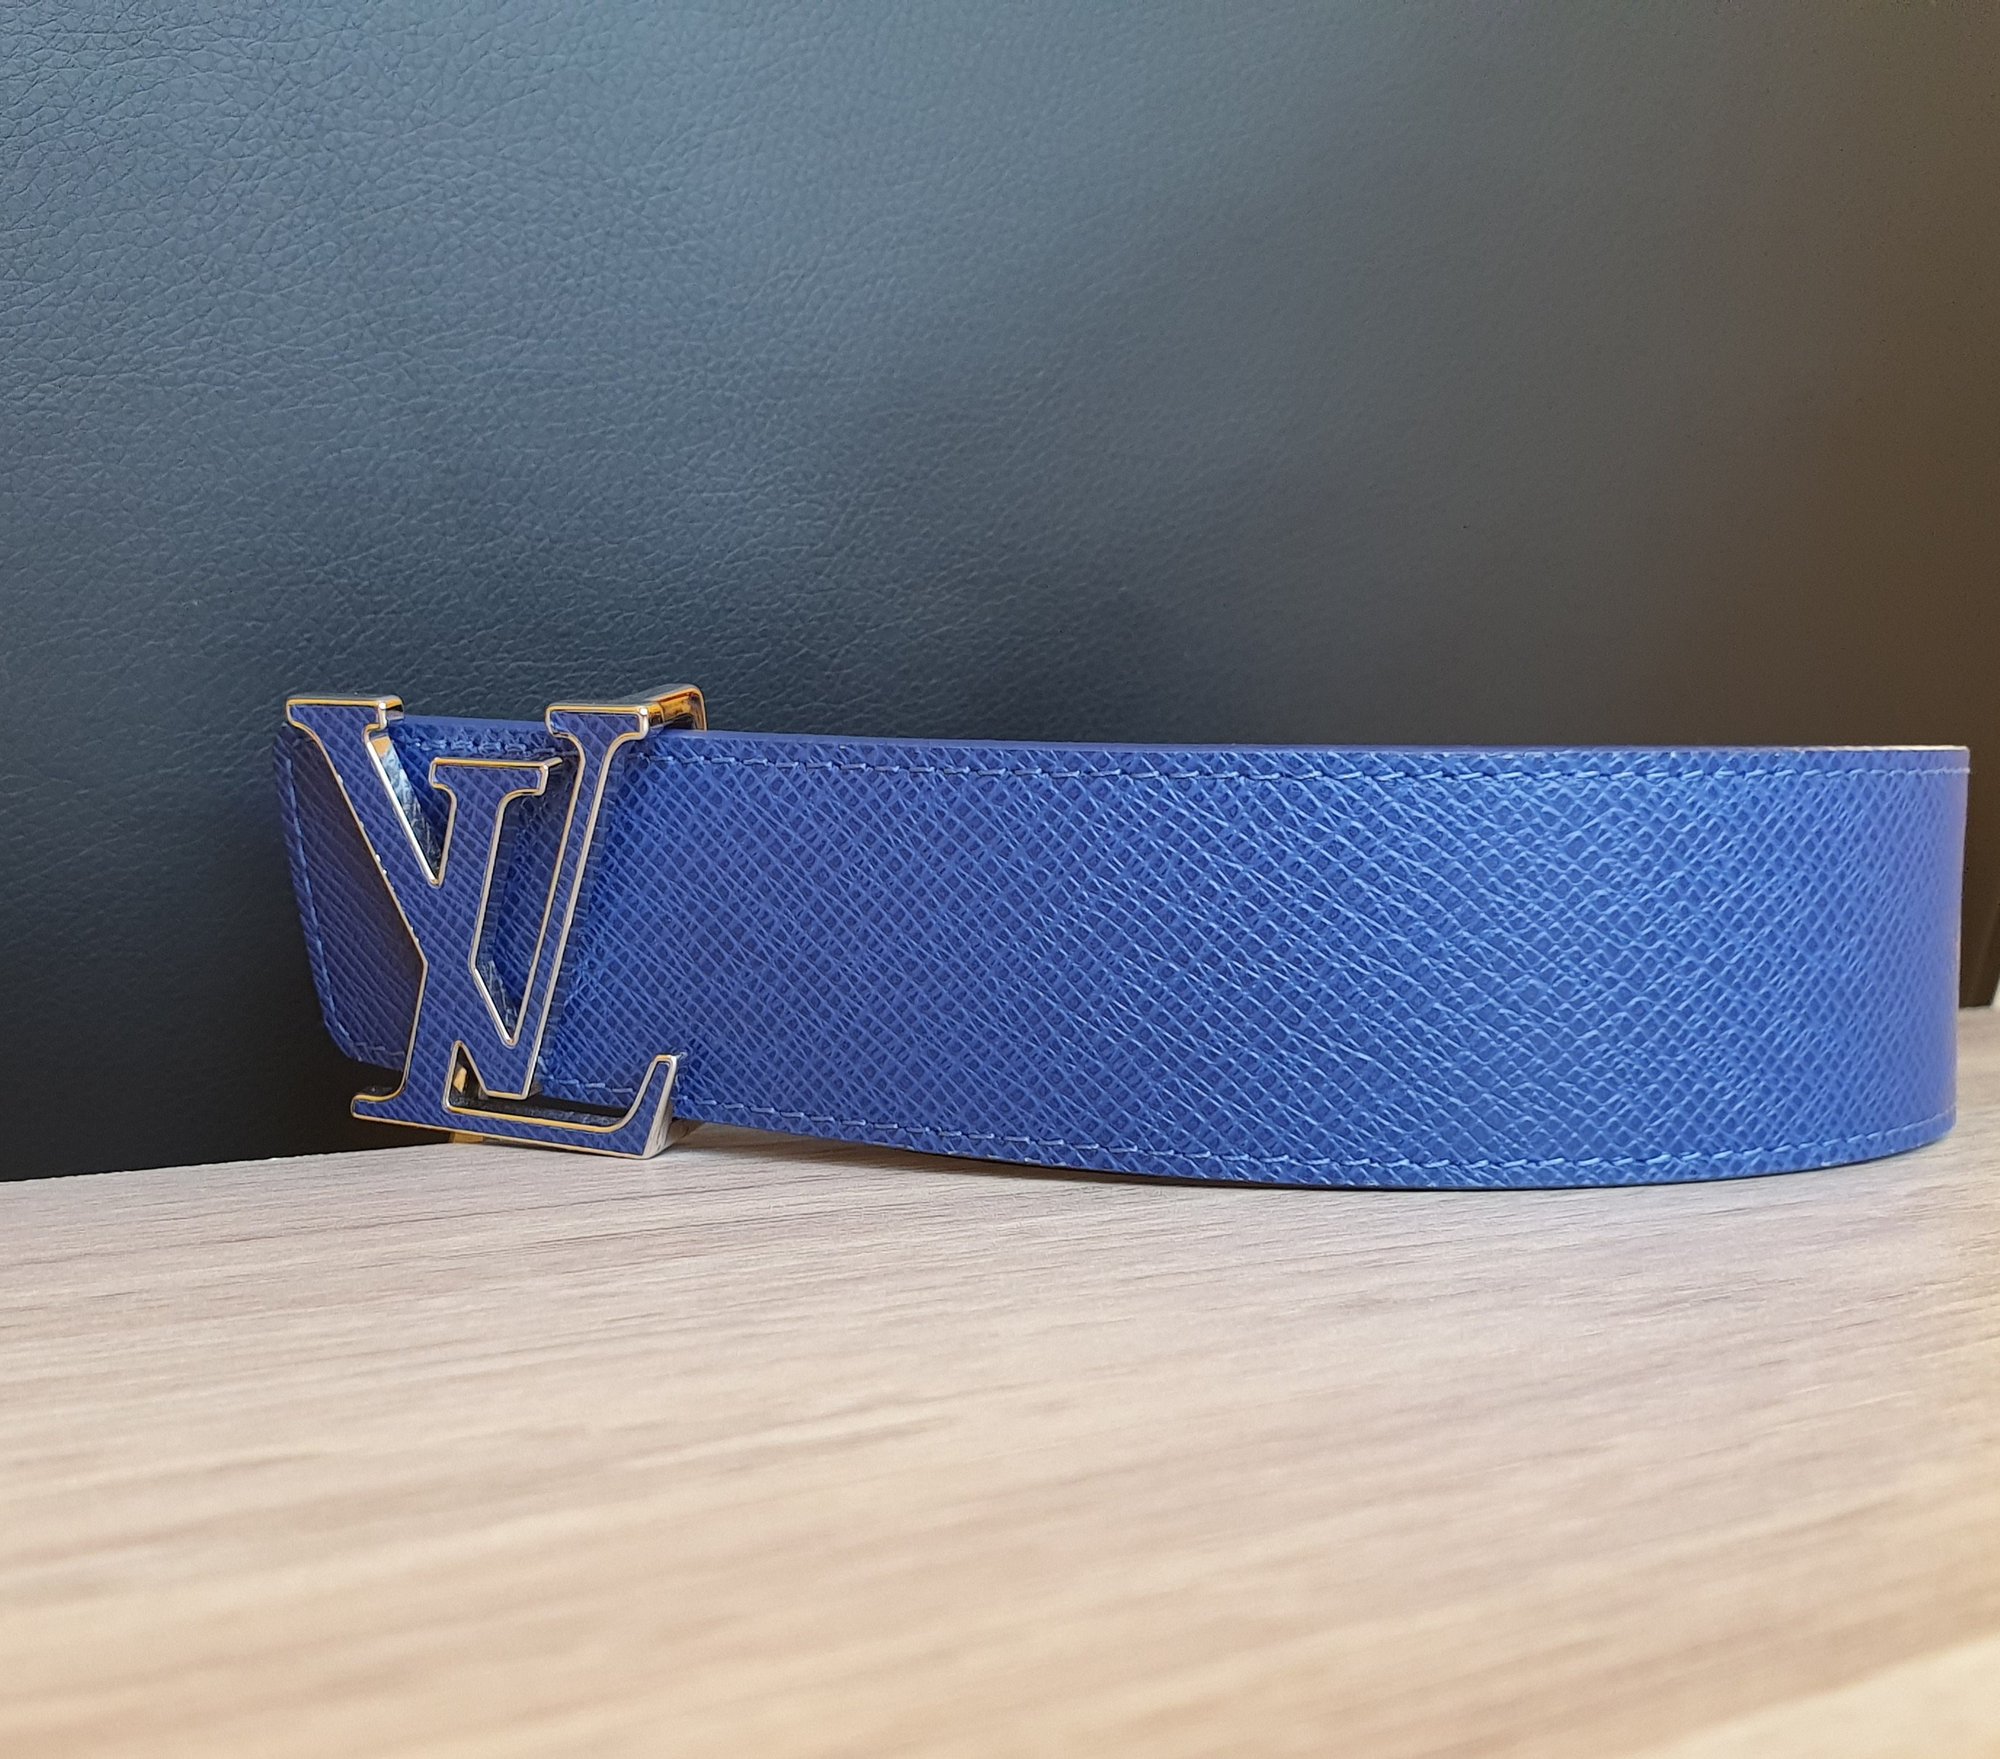 Louis Vuitton - LV Initiales - - Belt - Catawiki